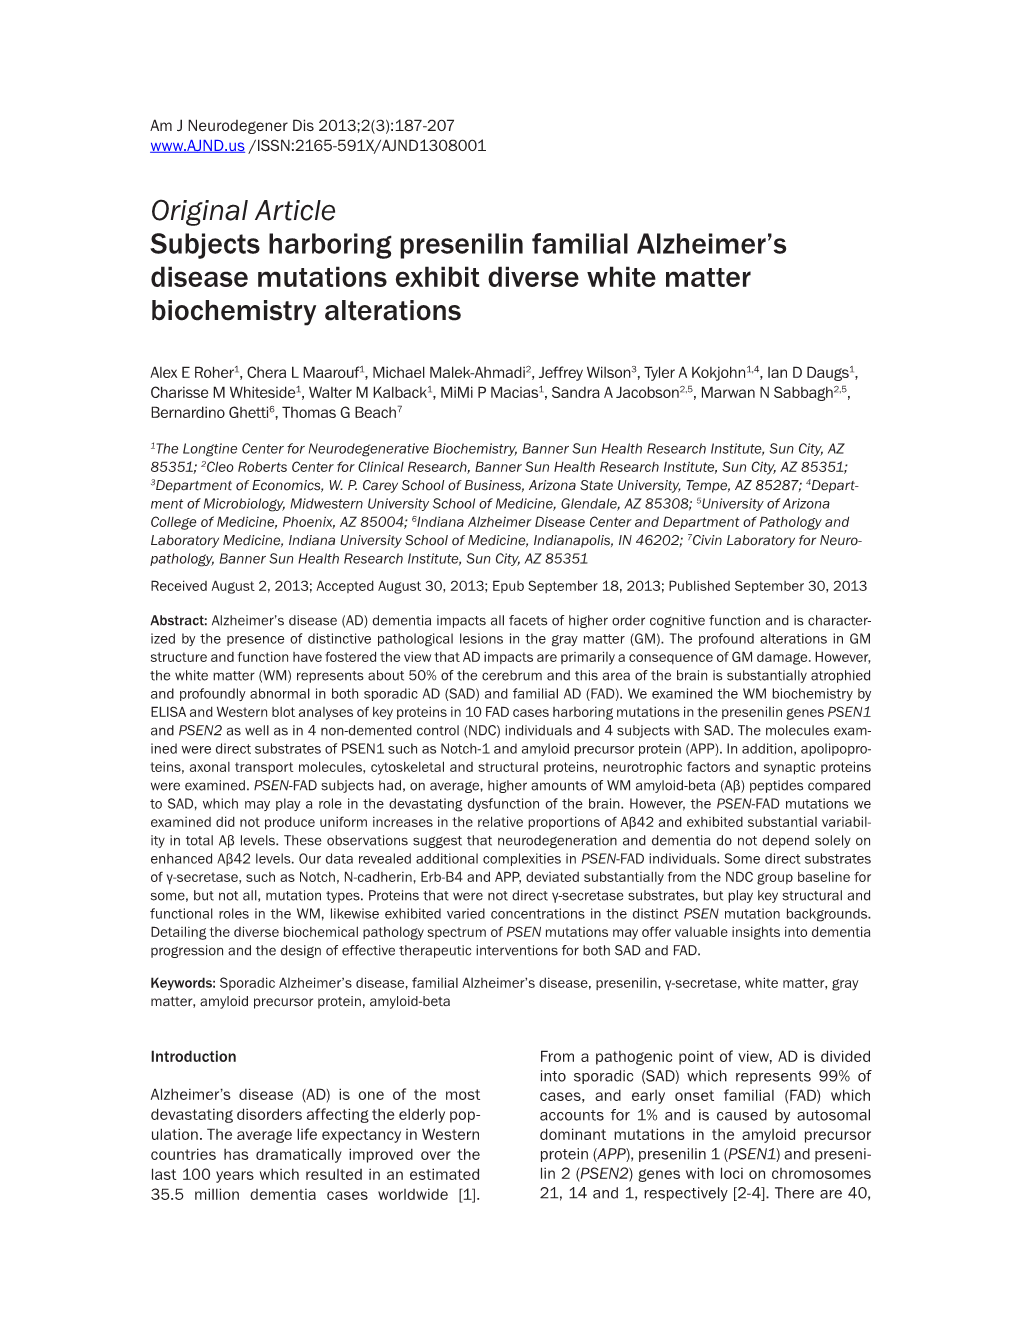 Original Article Subjects Harboring Presenilin Familial Alzheimer's